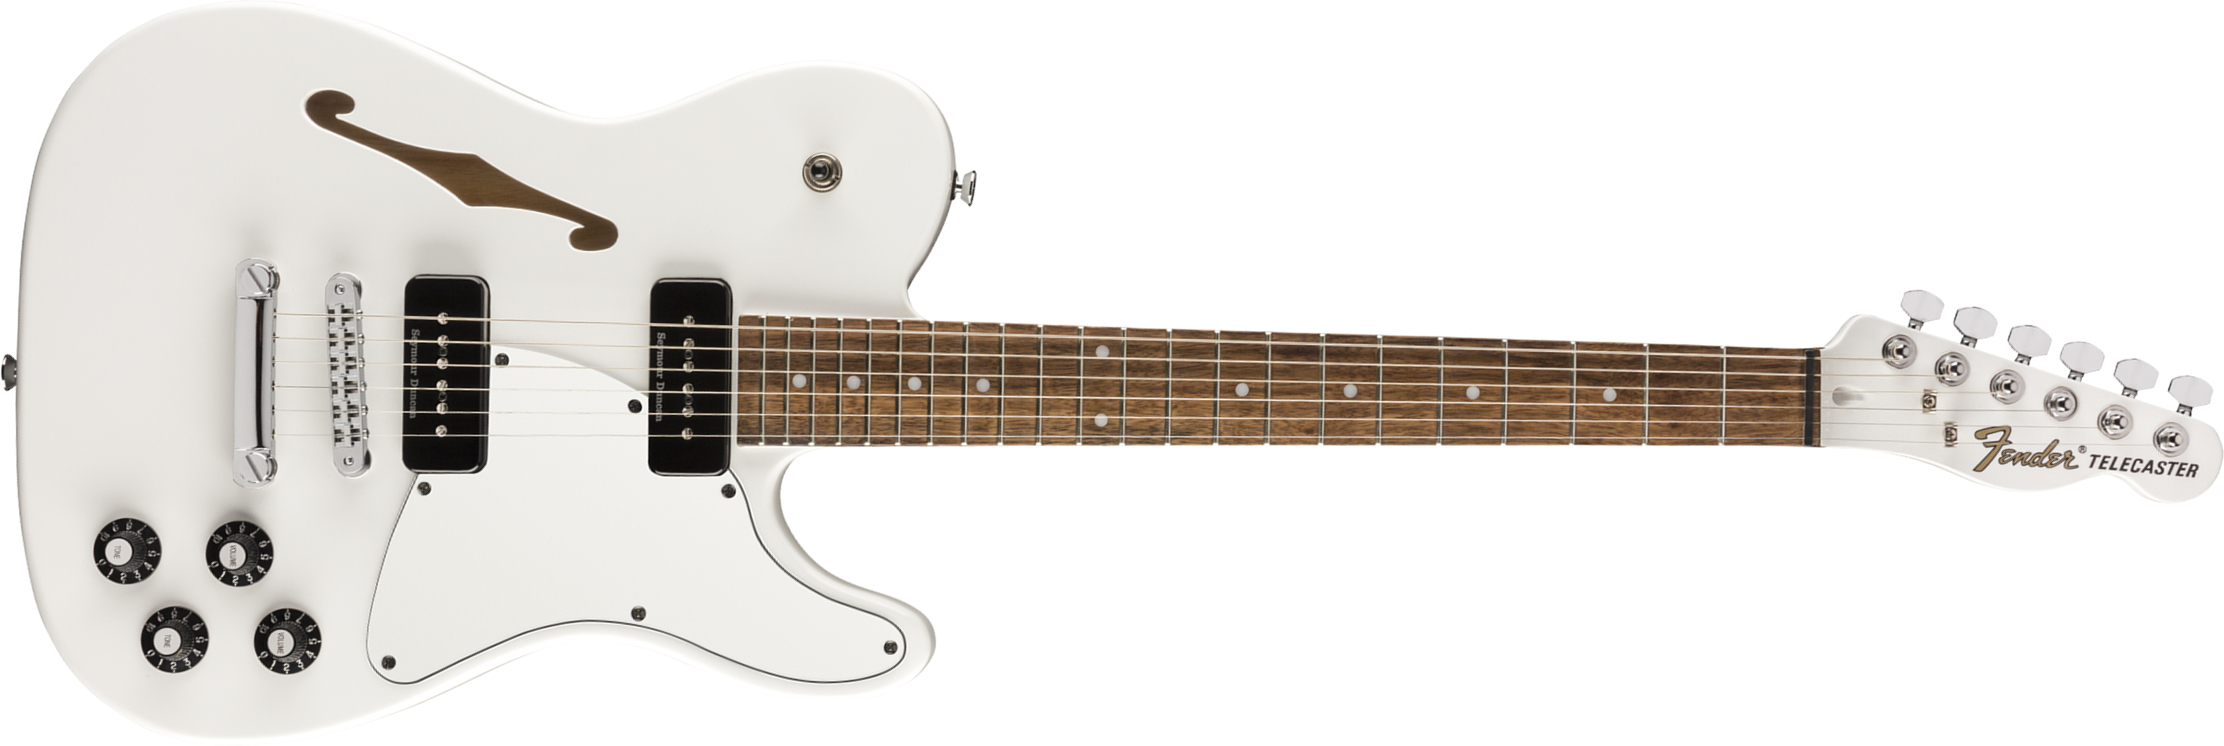 Fender Jim Adkins Tele Ja-90 Mex Signature 2p90 Lau - White - Tel shape electric guitar - Main picture